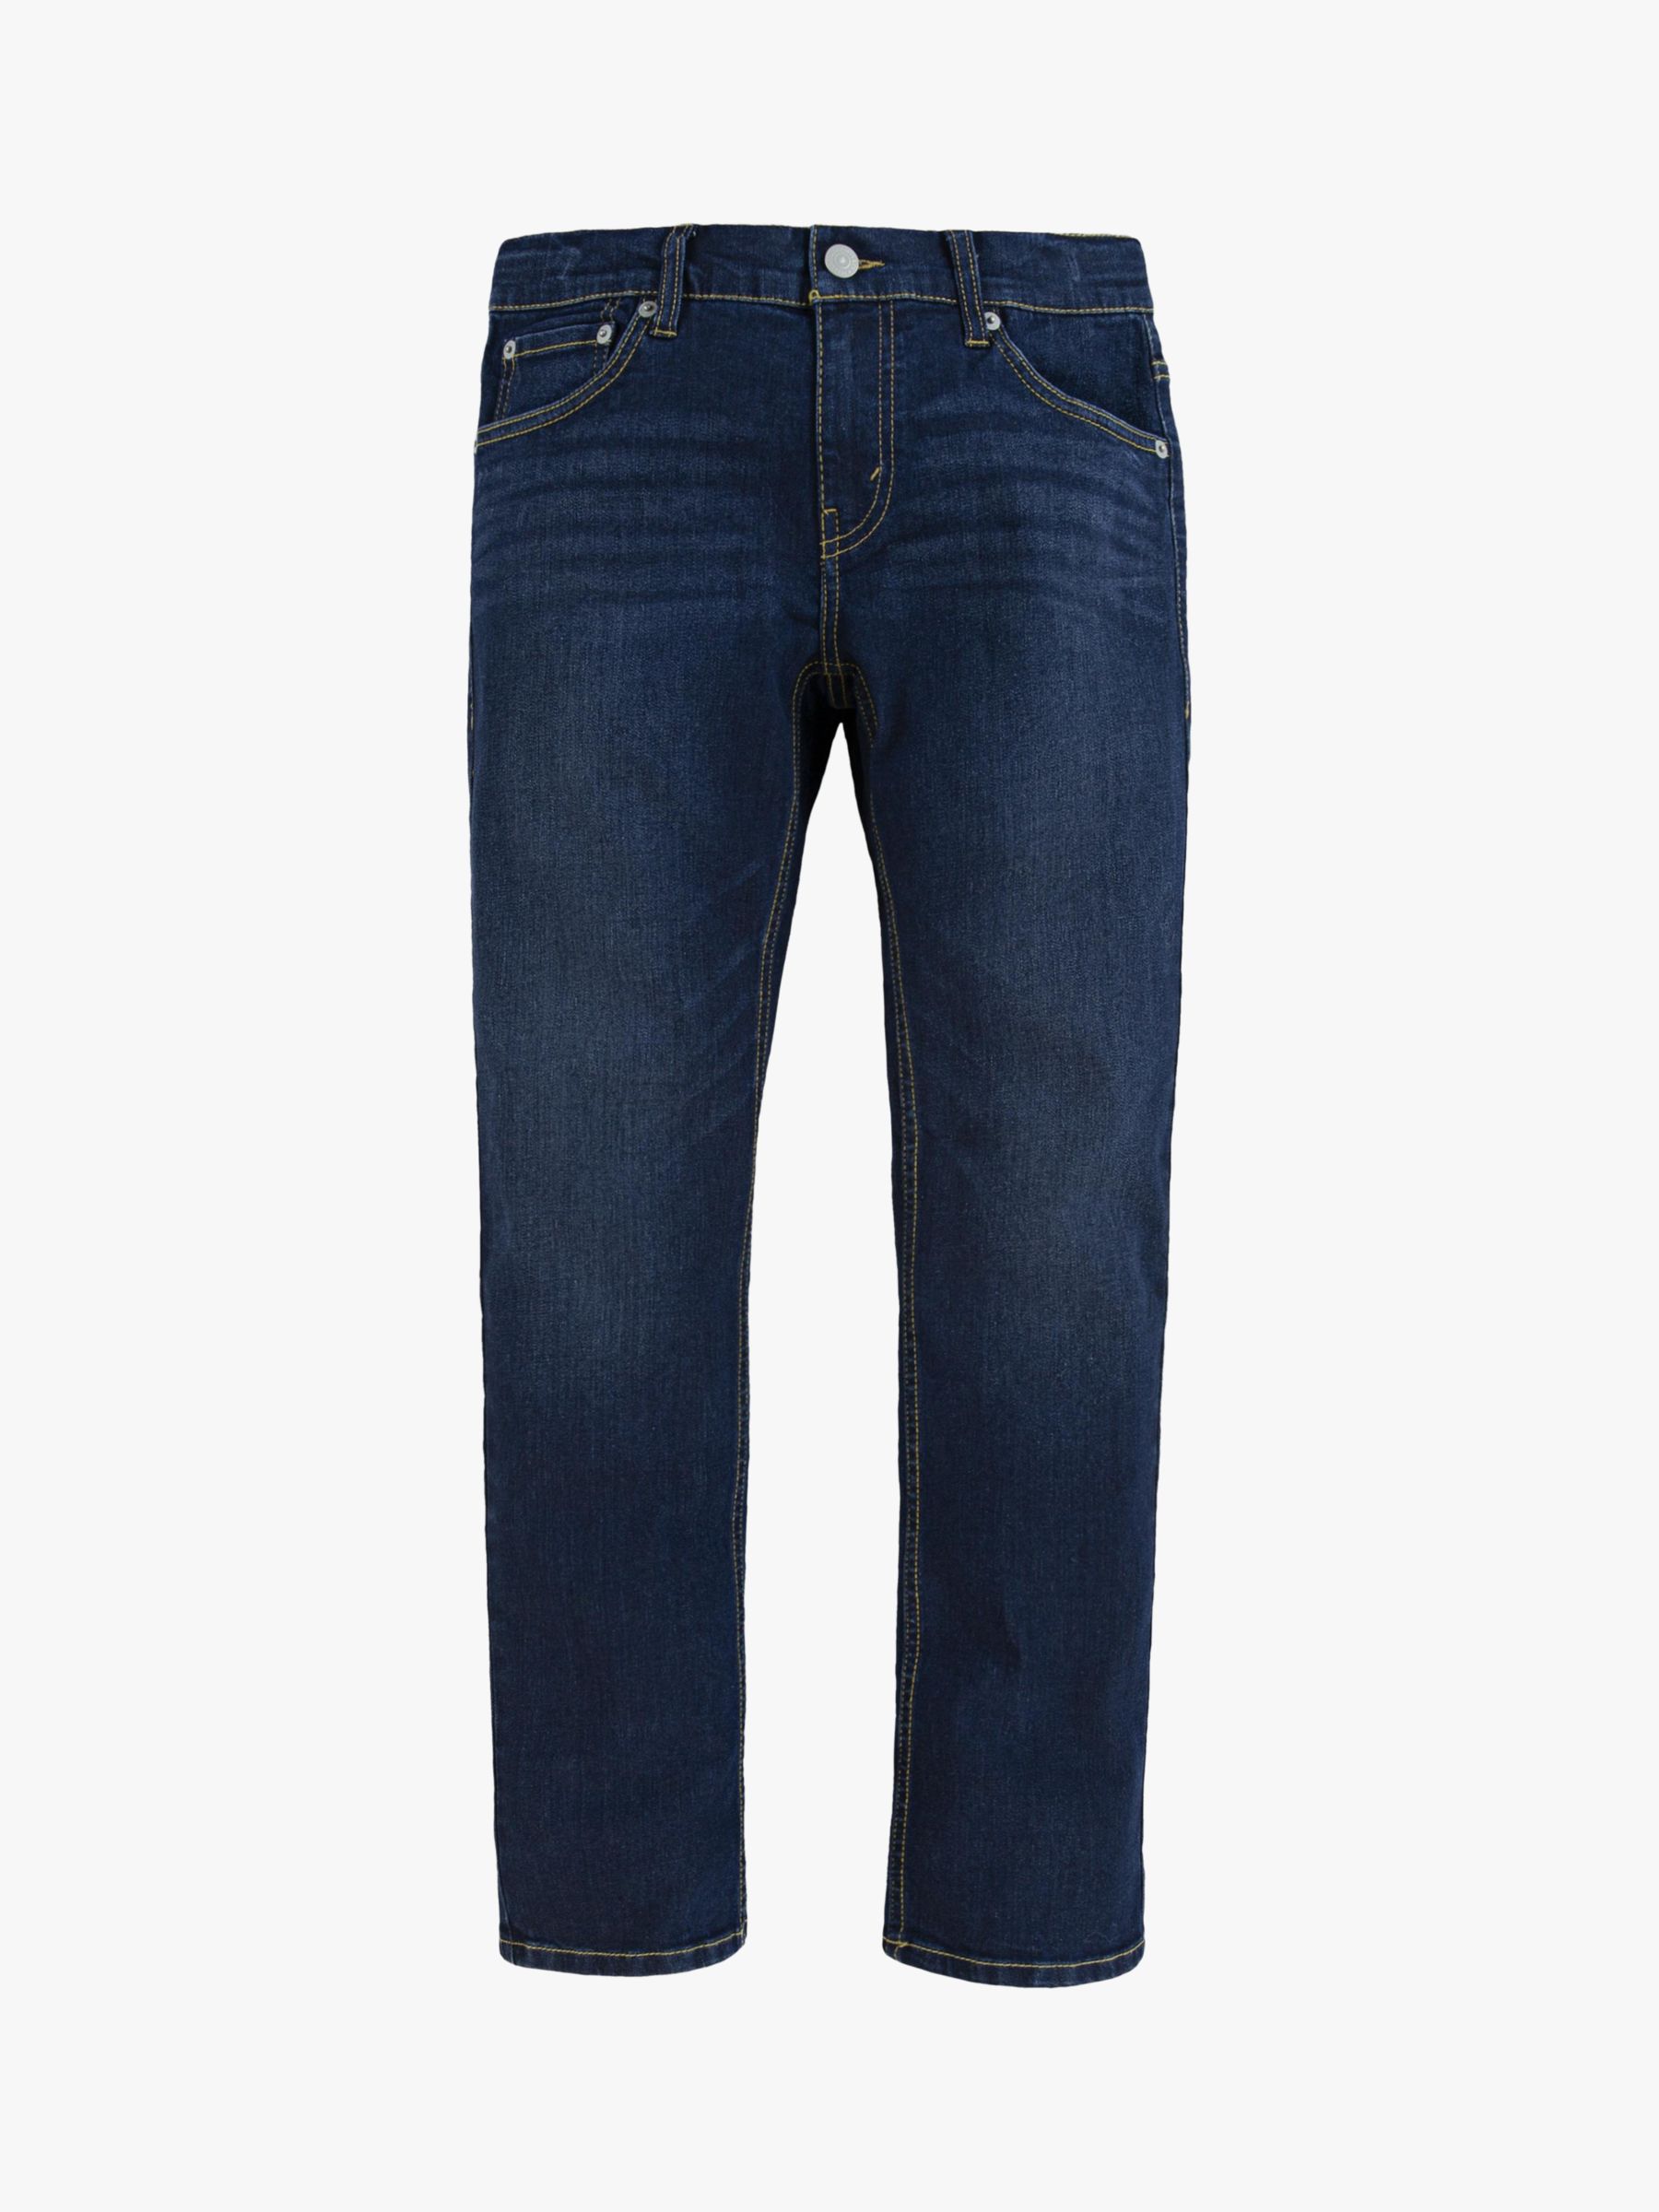 Levi Boys' 511 Slim Fit Jeans, Blue Denim at John Lewis & Partners